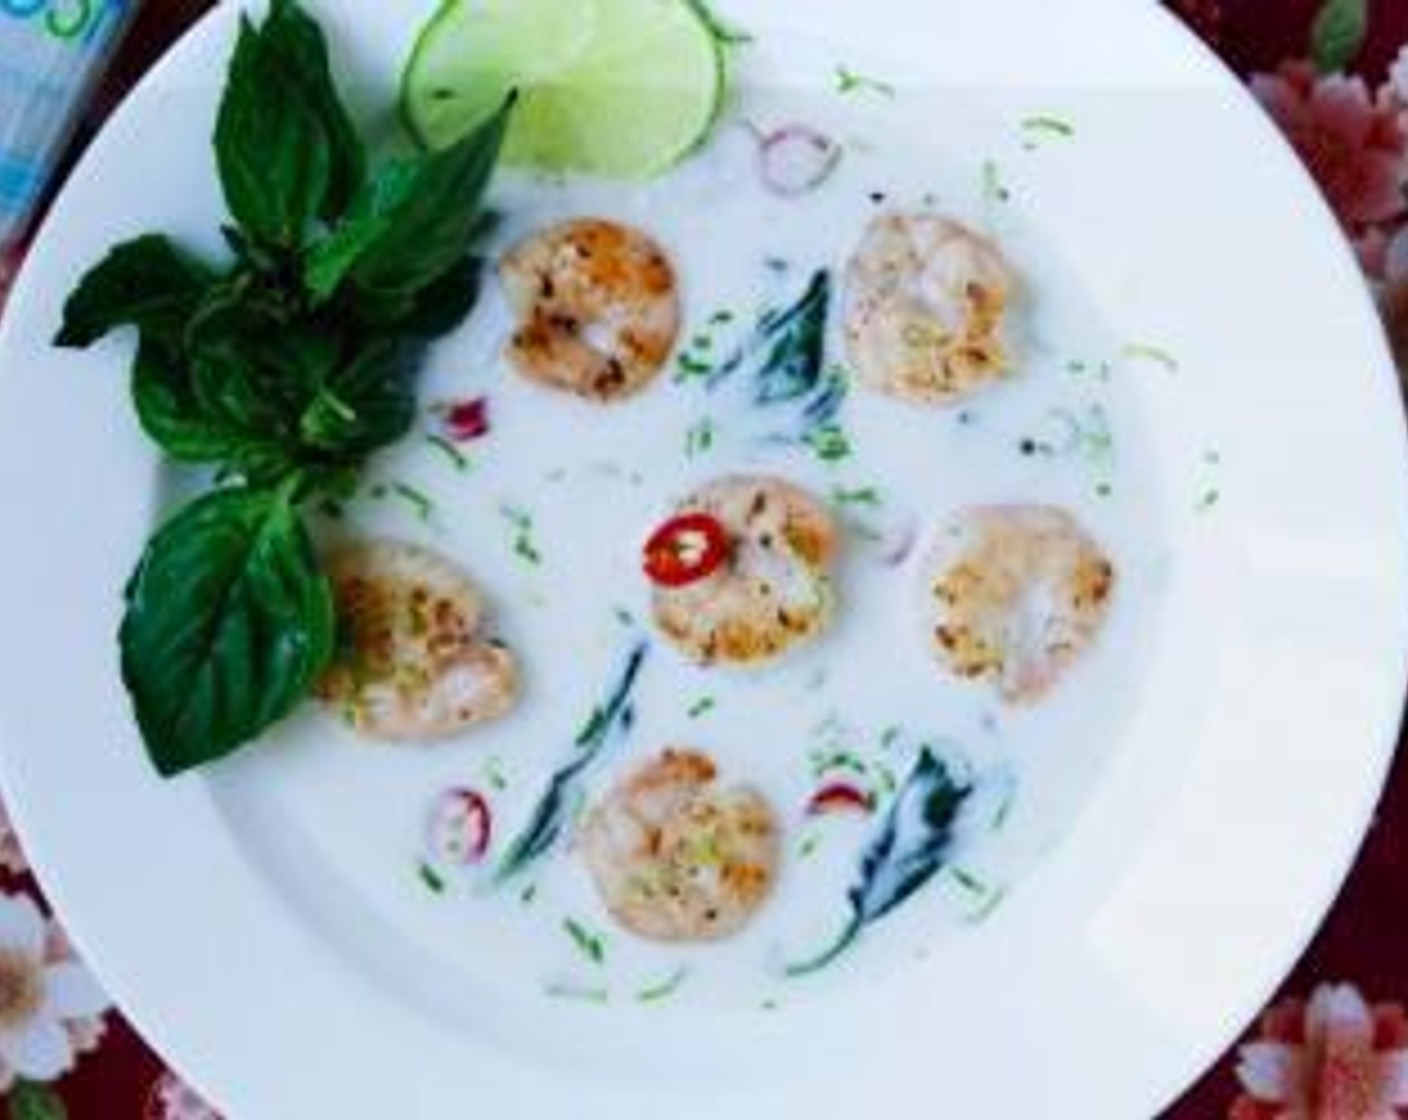 Seared Shrimps with Coconut Lemongrass Sauce